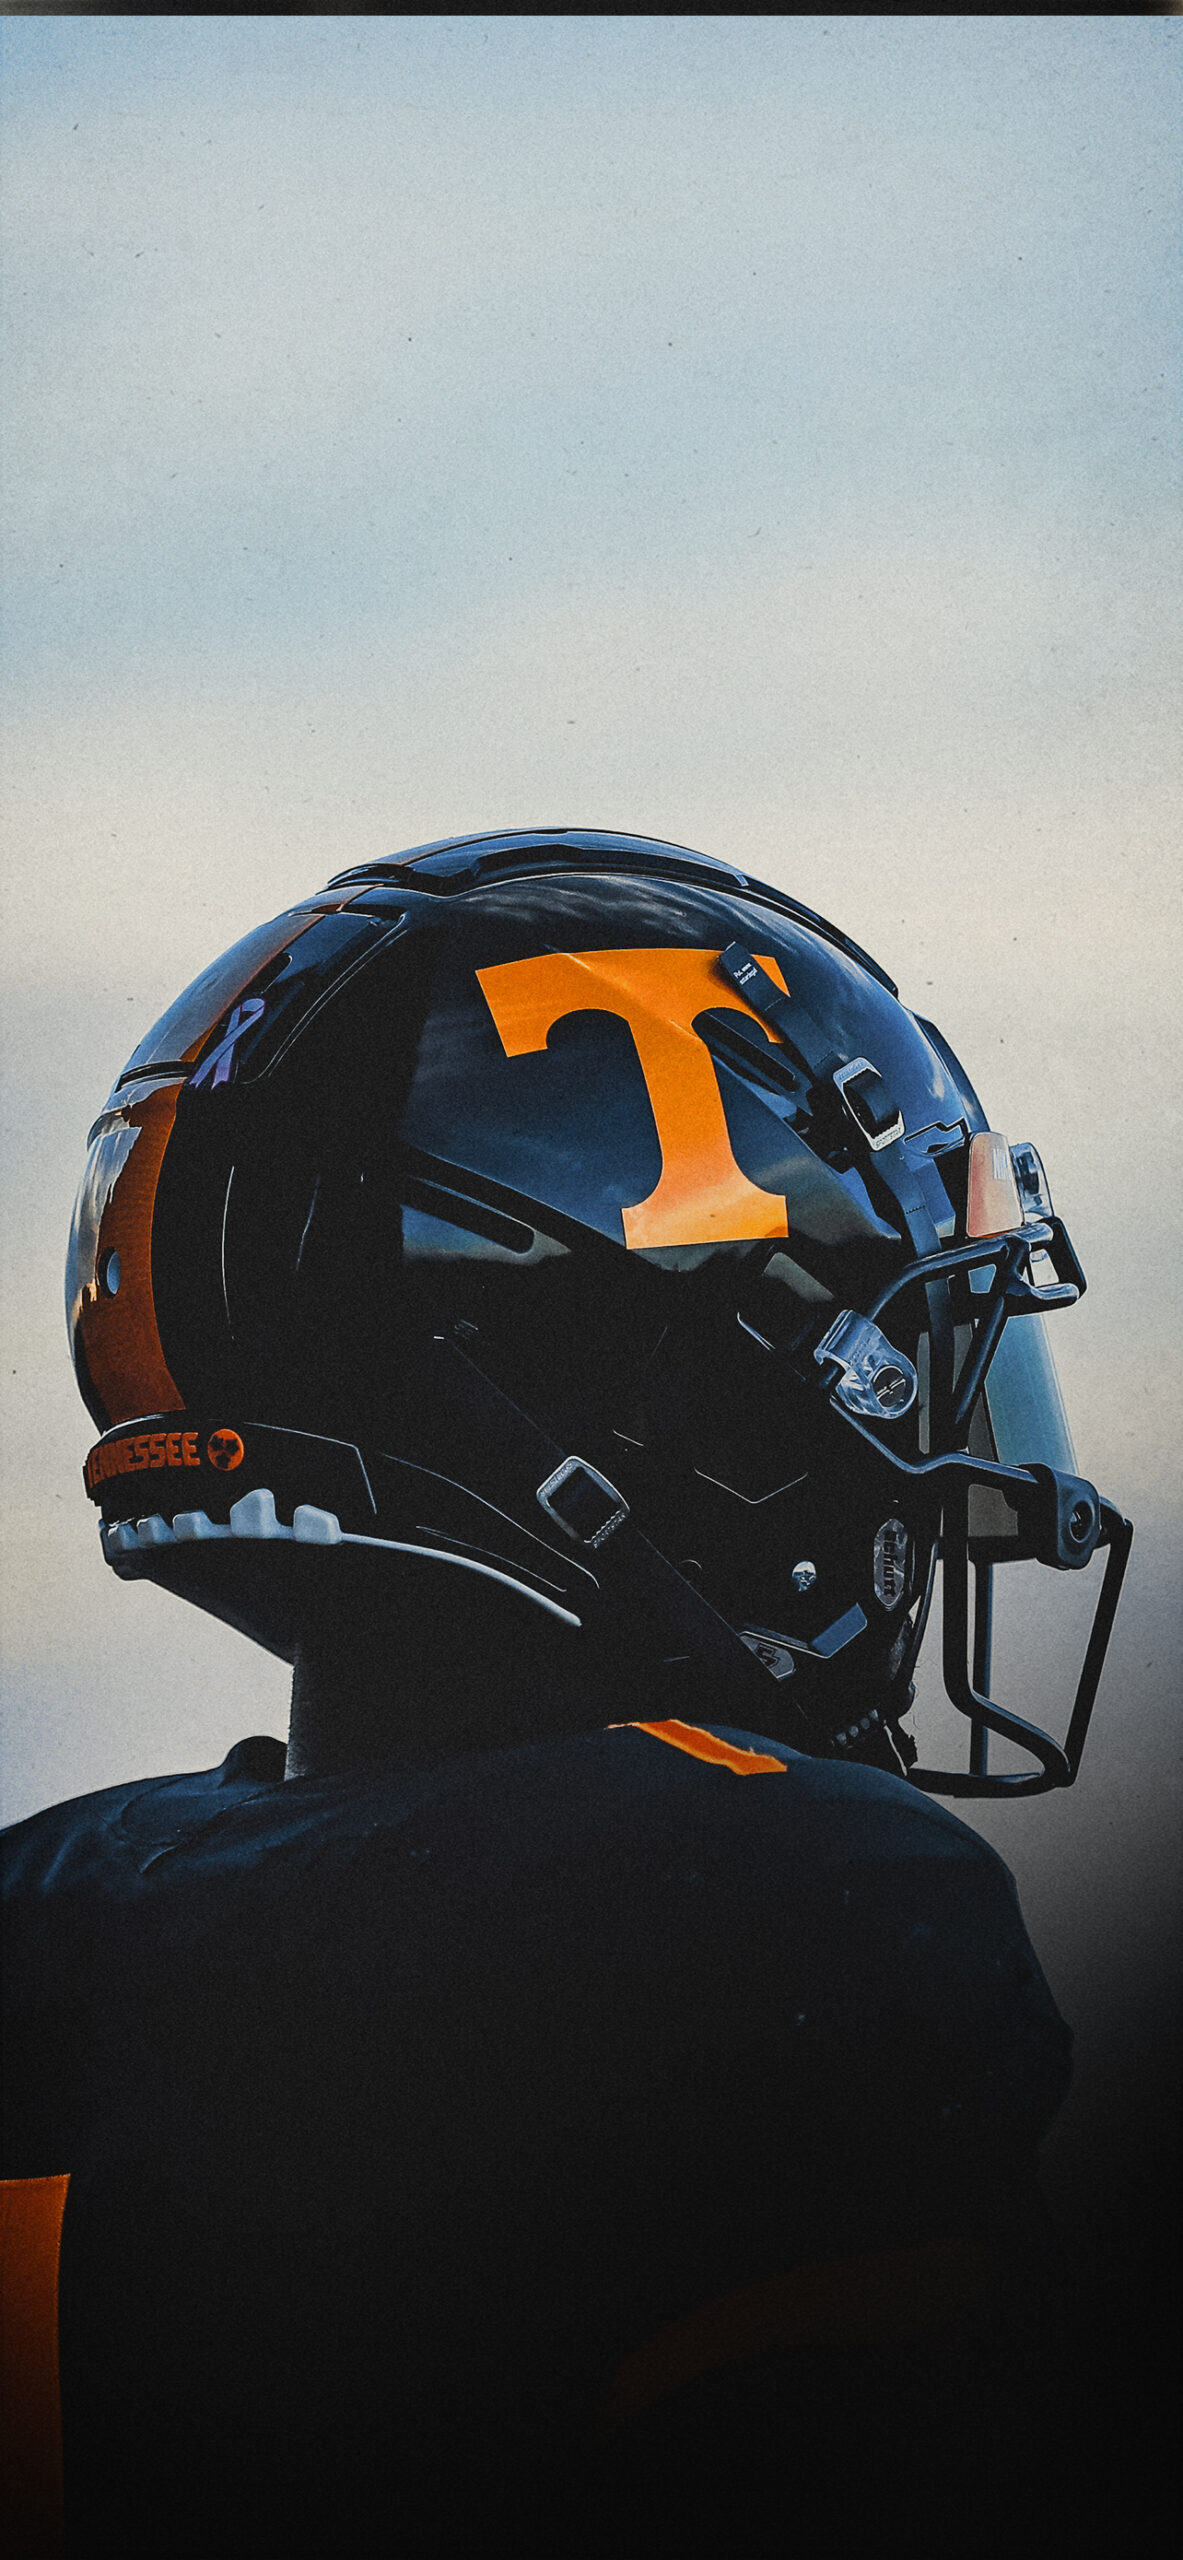 Pure fire': Tennessee fans react to dark mode uniforms, black helmet